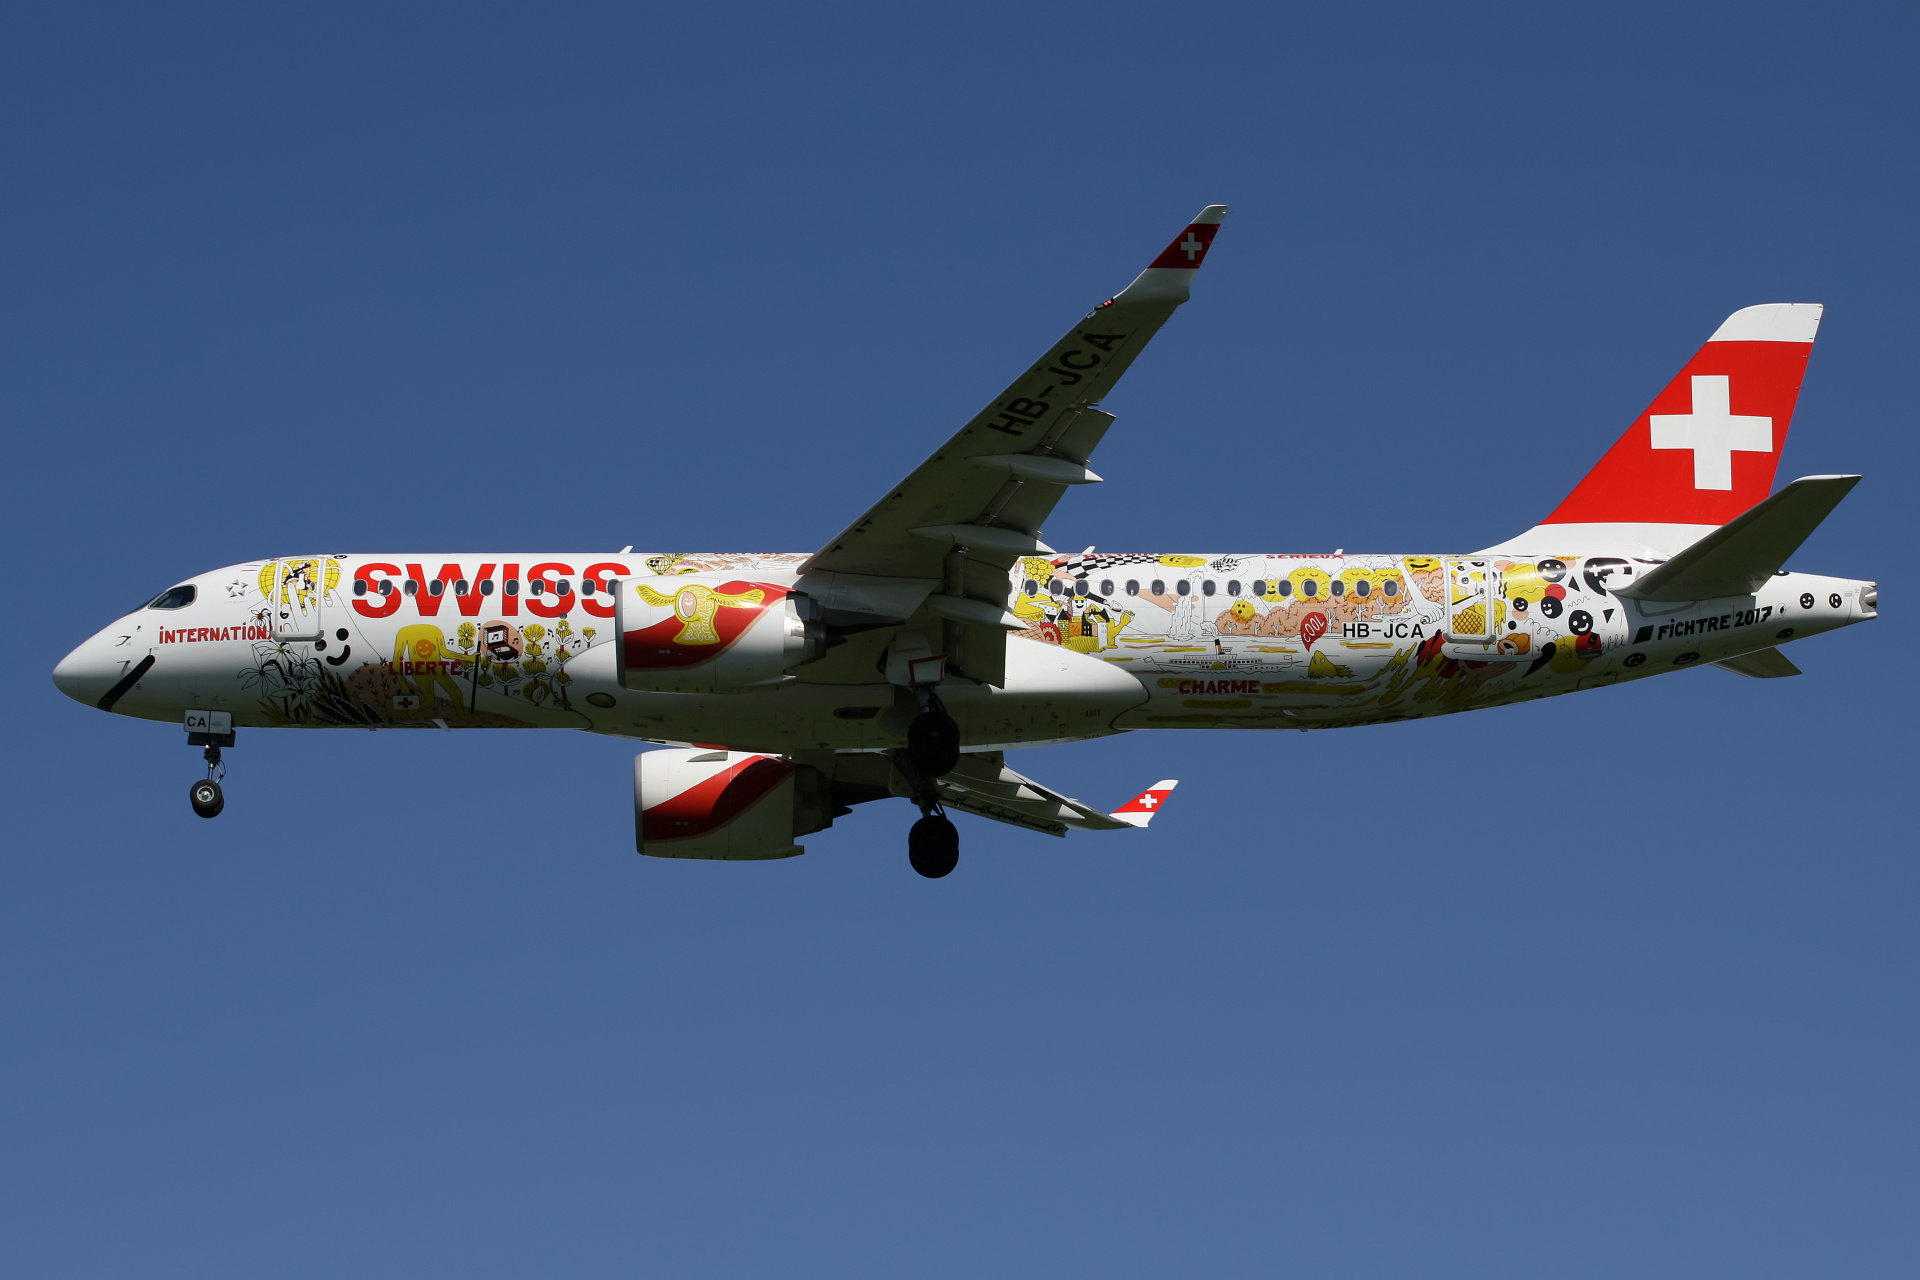 HB-JCA (Swiss Romandy livery) (Aircraft » EPWA Spotting » Airbus A220-300 » Swiss International Air Lines)